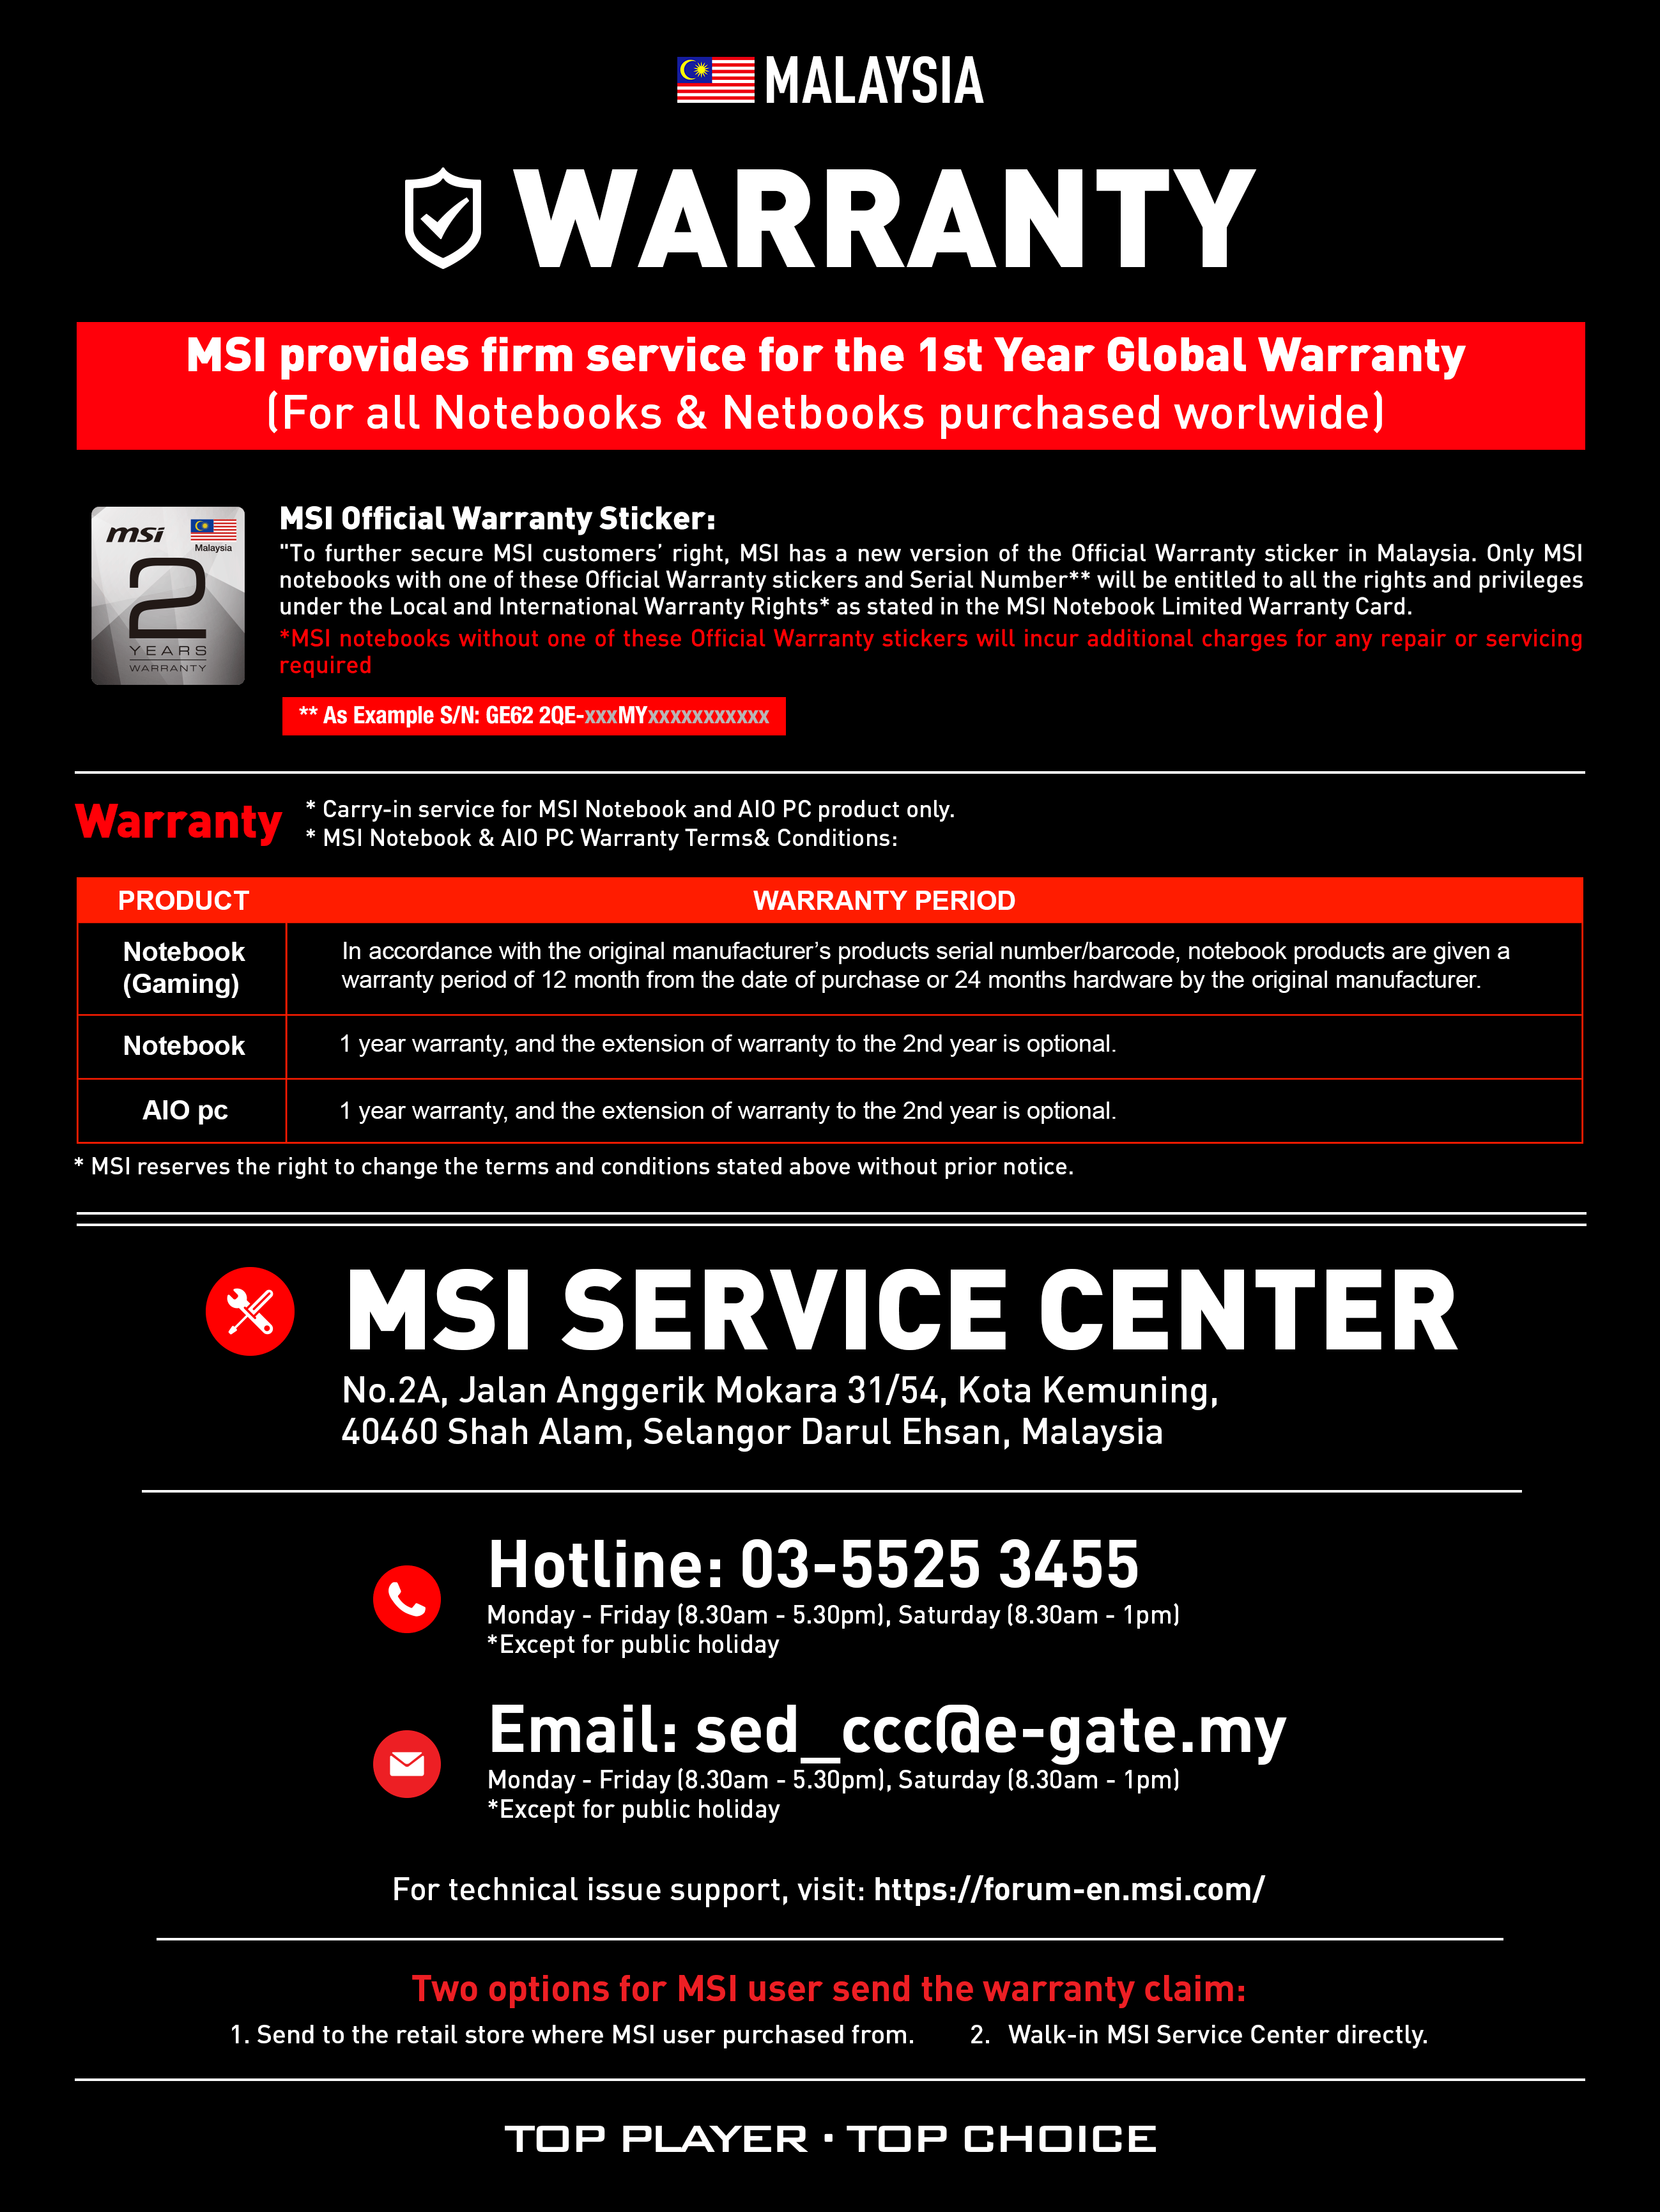 msi center privacy policy